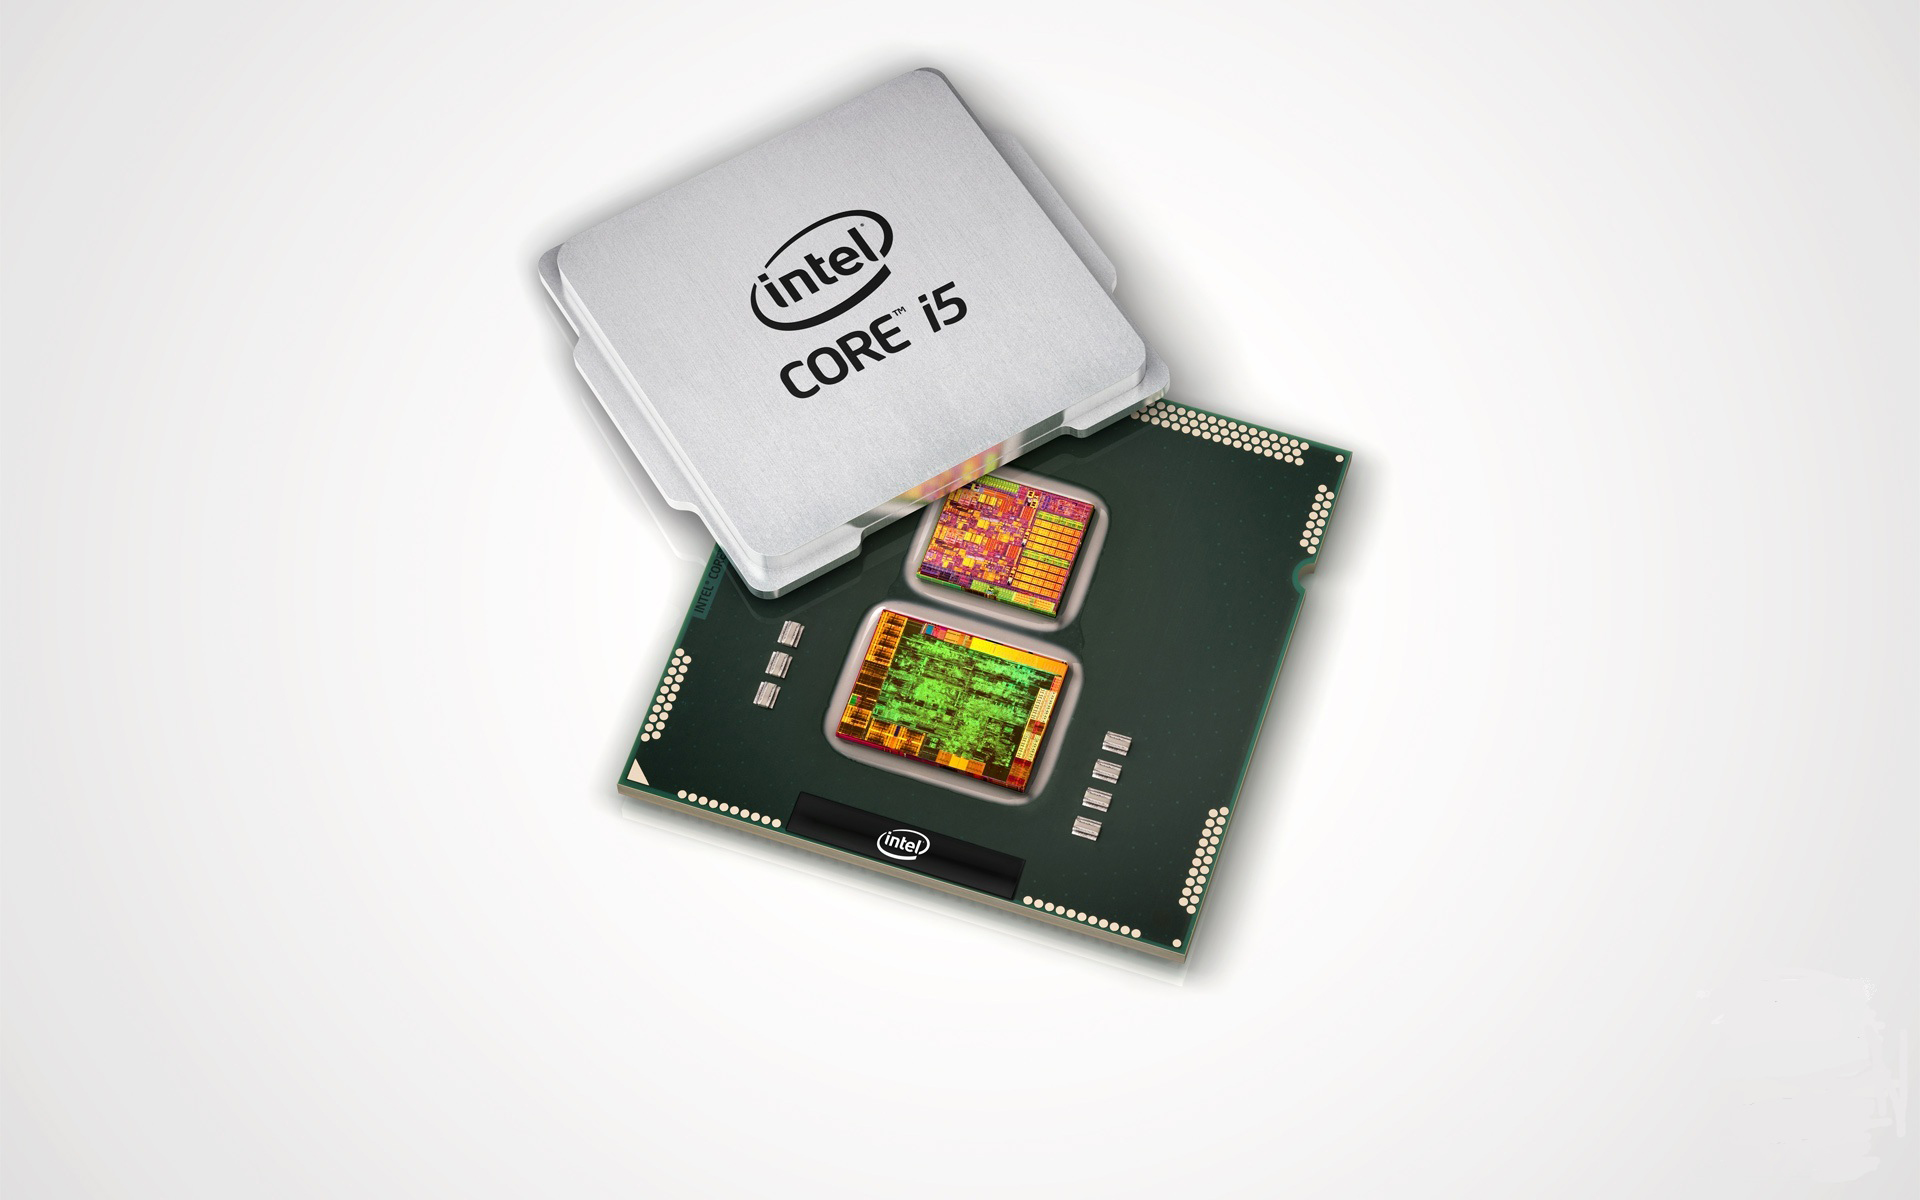 Intel Core I5 Die Wallpaper HD 99wallpaper